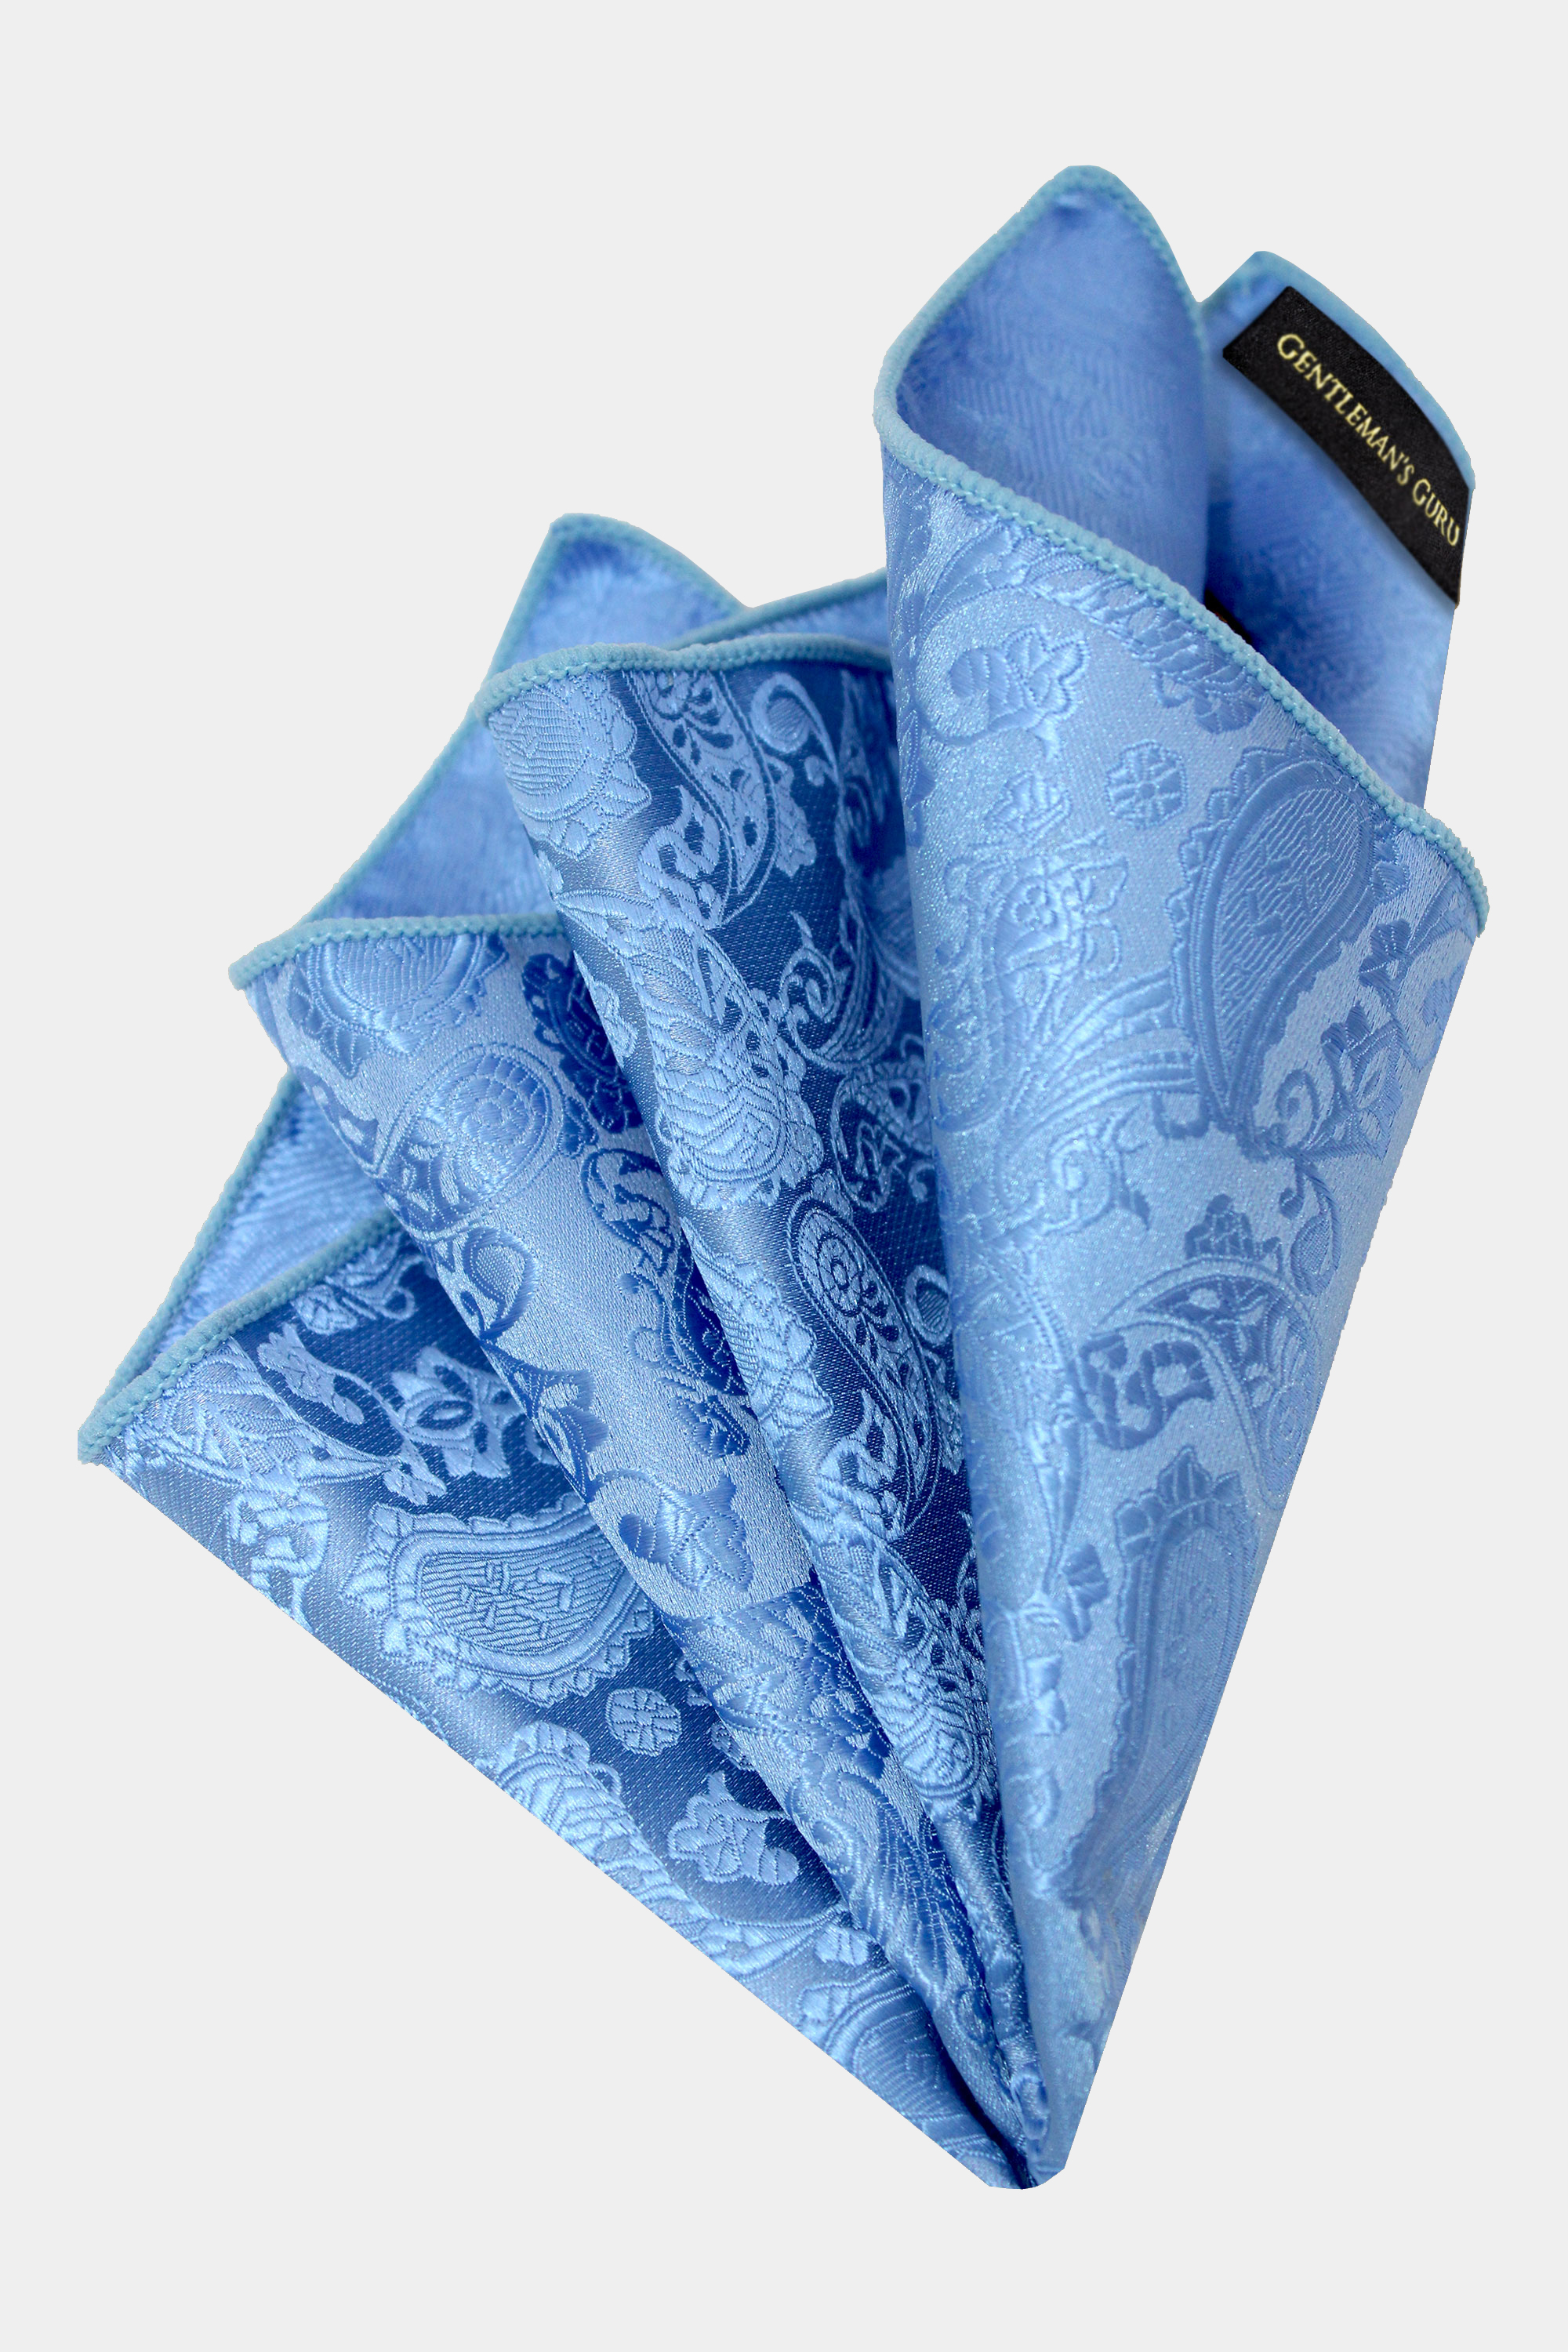 Light-Blue-Paisley-Pocket-Square-Handkerchief-from-Gentlemansguru.com_